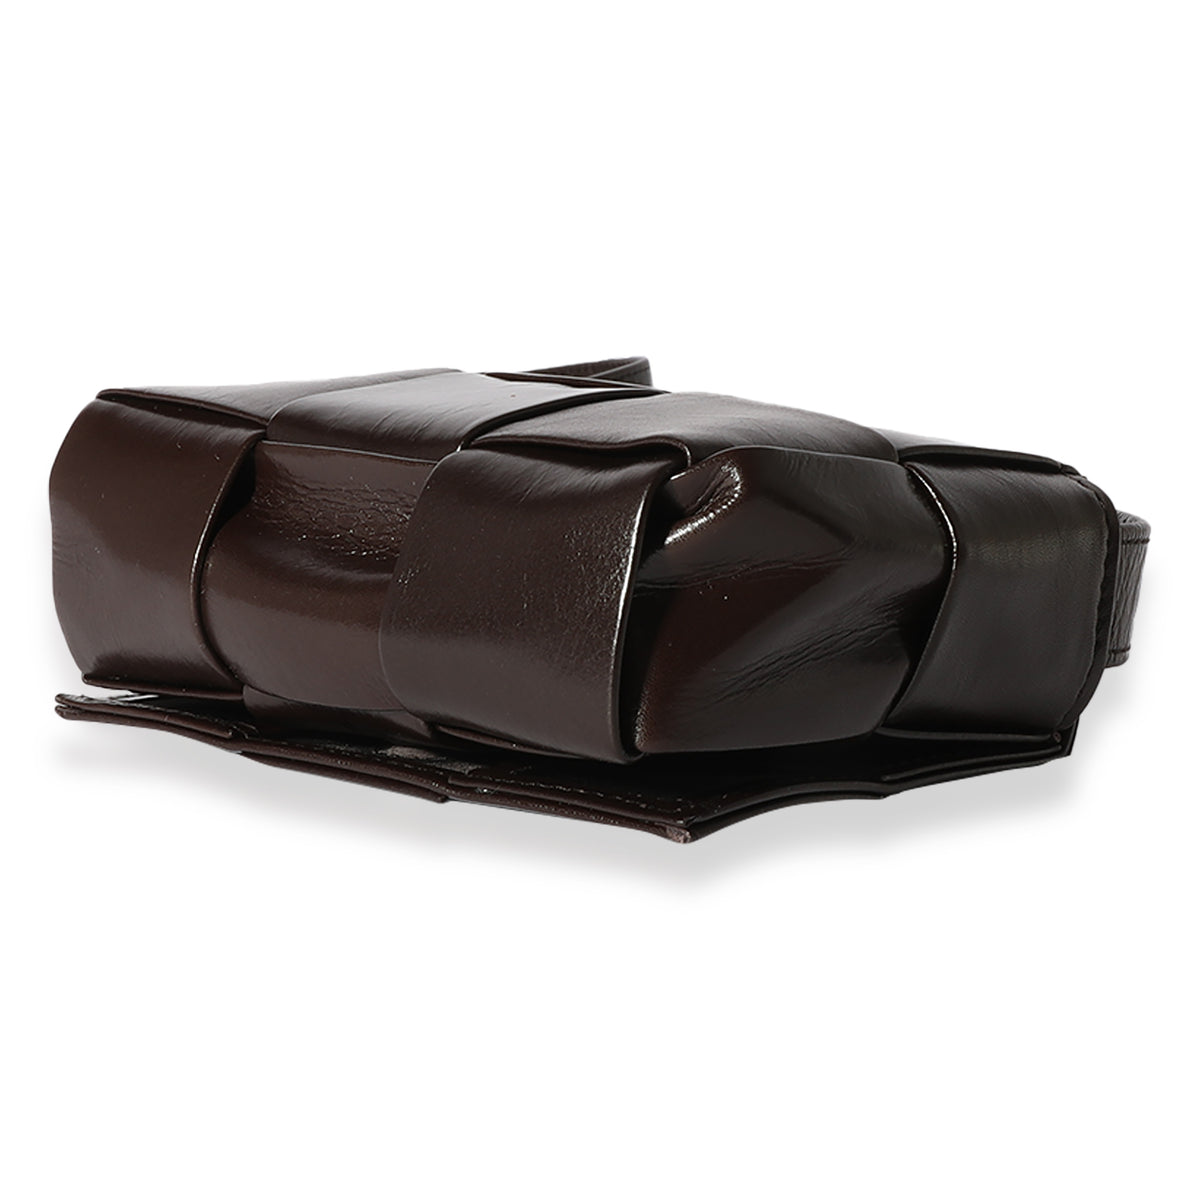 BOTTEGA VENETA Intrecciato glossed-leather wallet, Sale up to 70% off